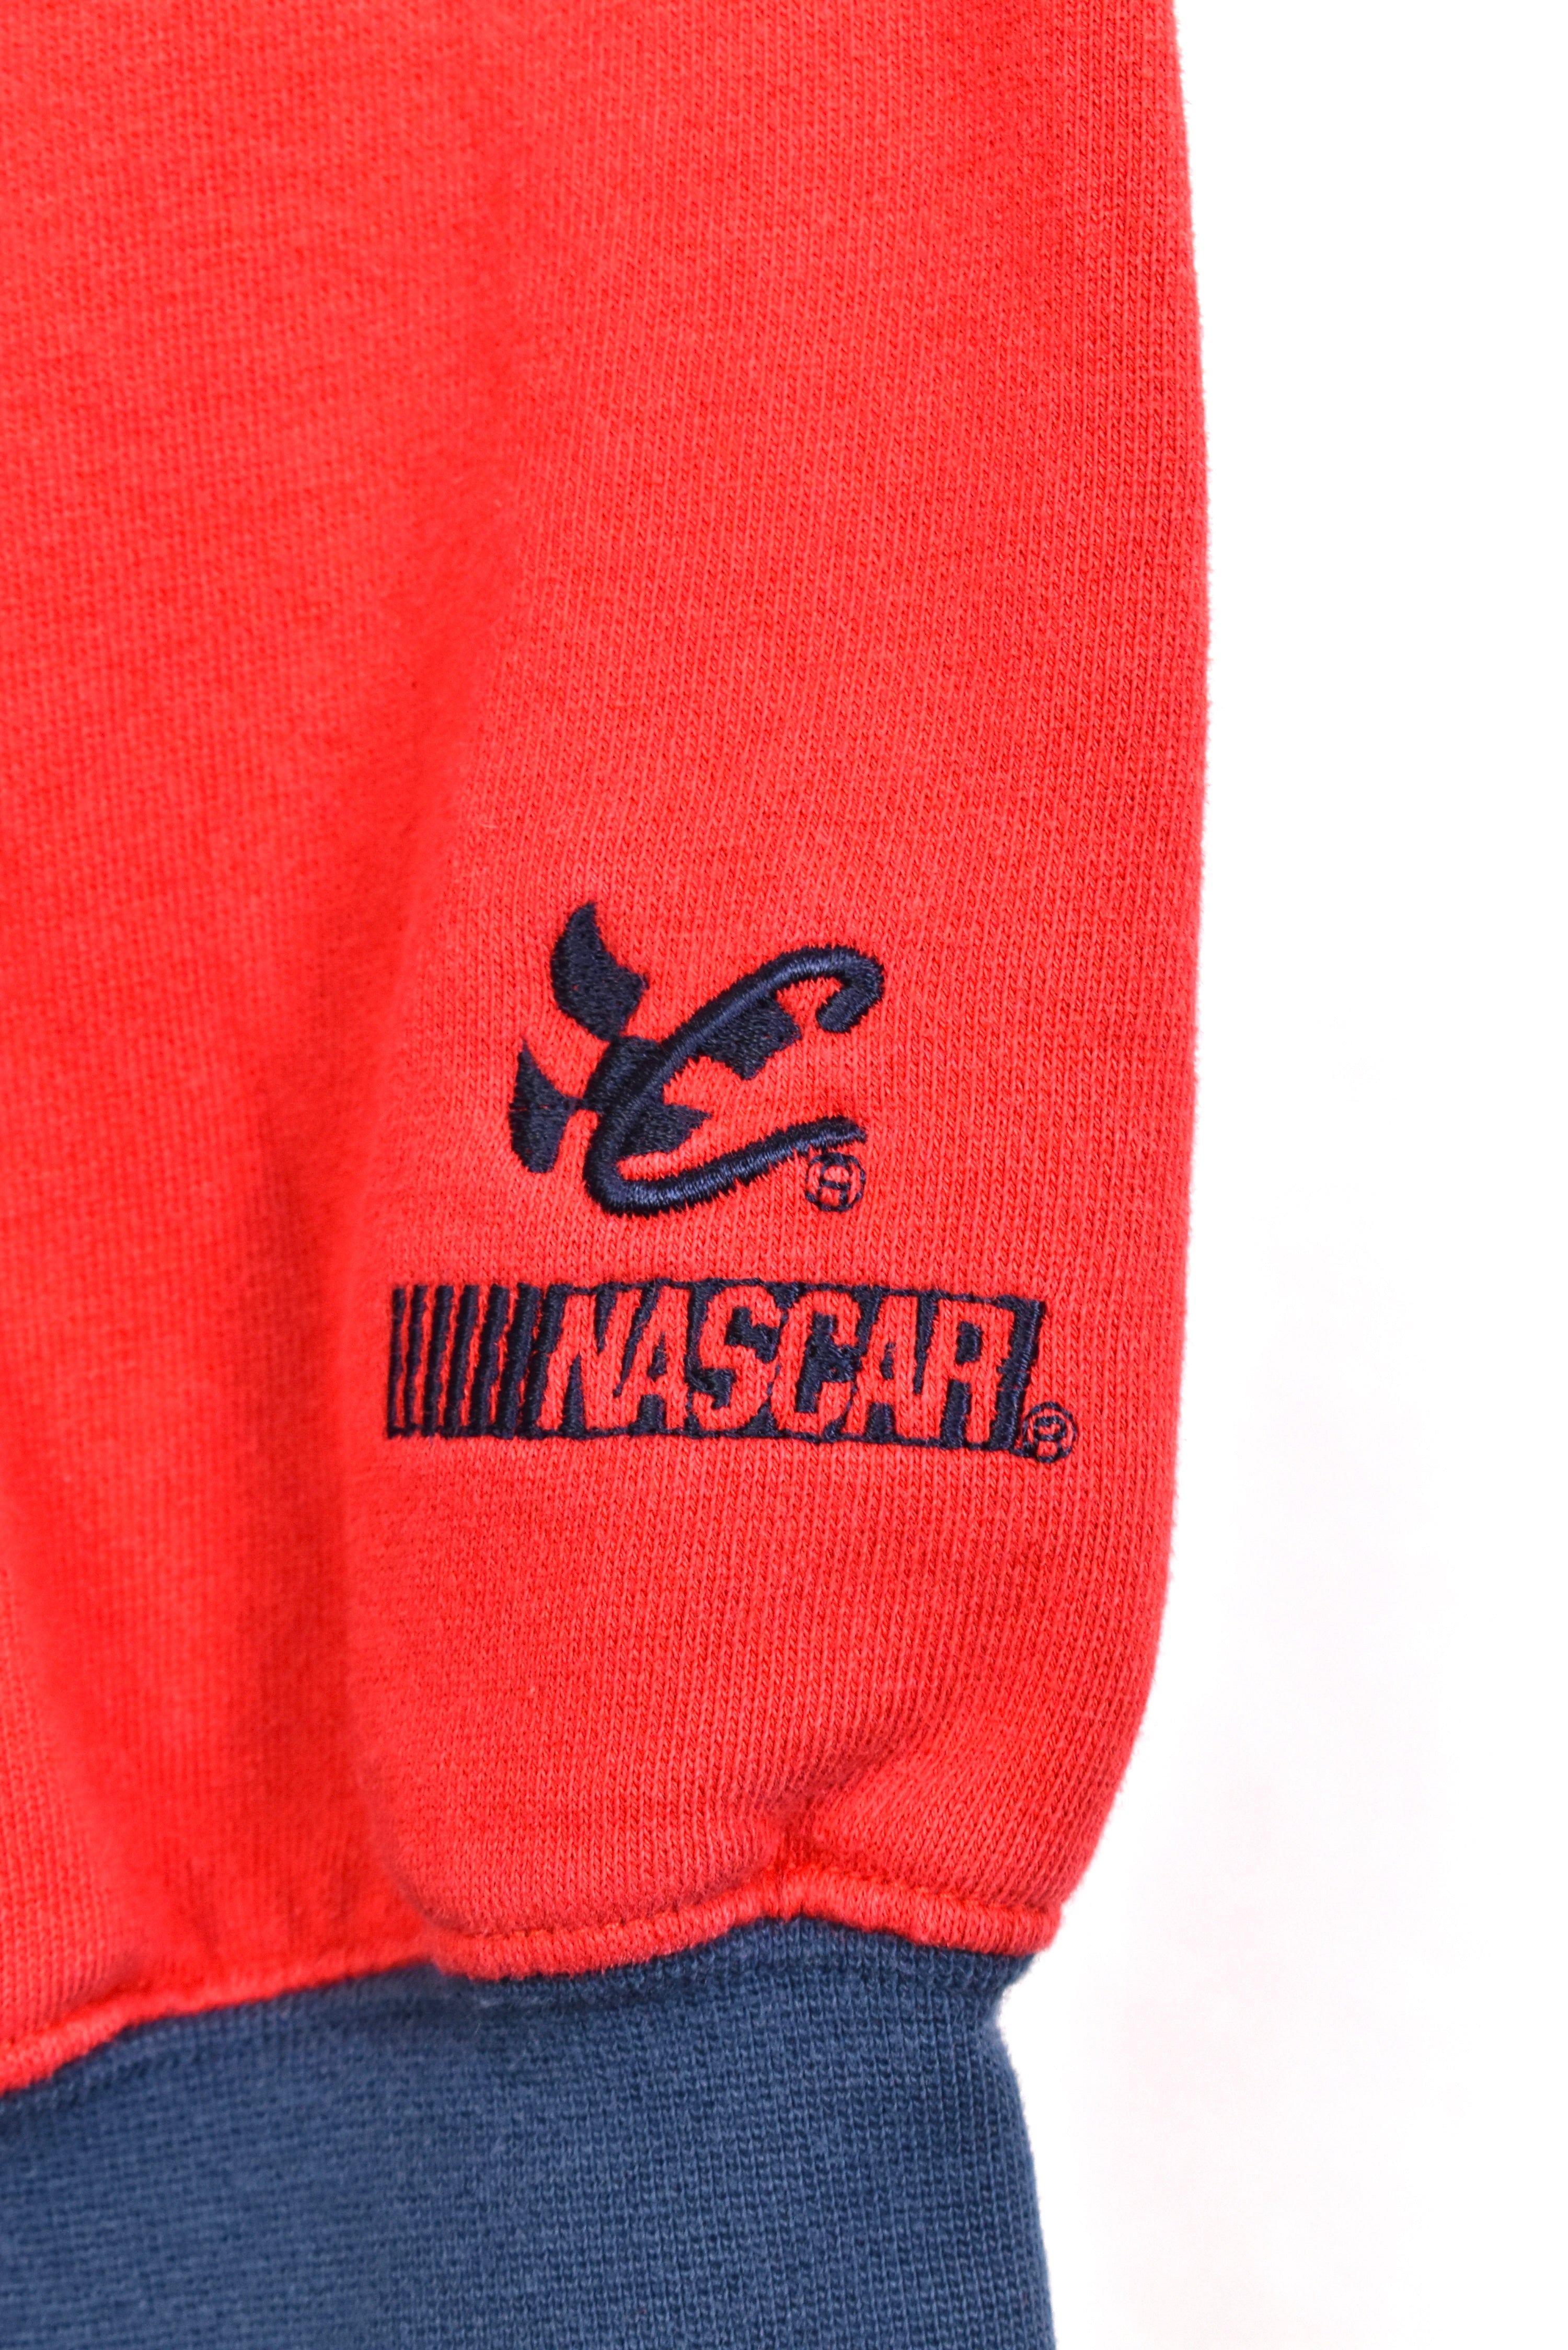 Vintage NASCAR sweatshirt, Jeff Gordon embroidered crewneck - AU XXXL NASCAR / RACING